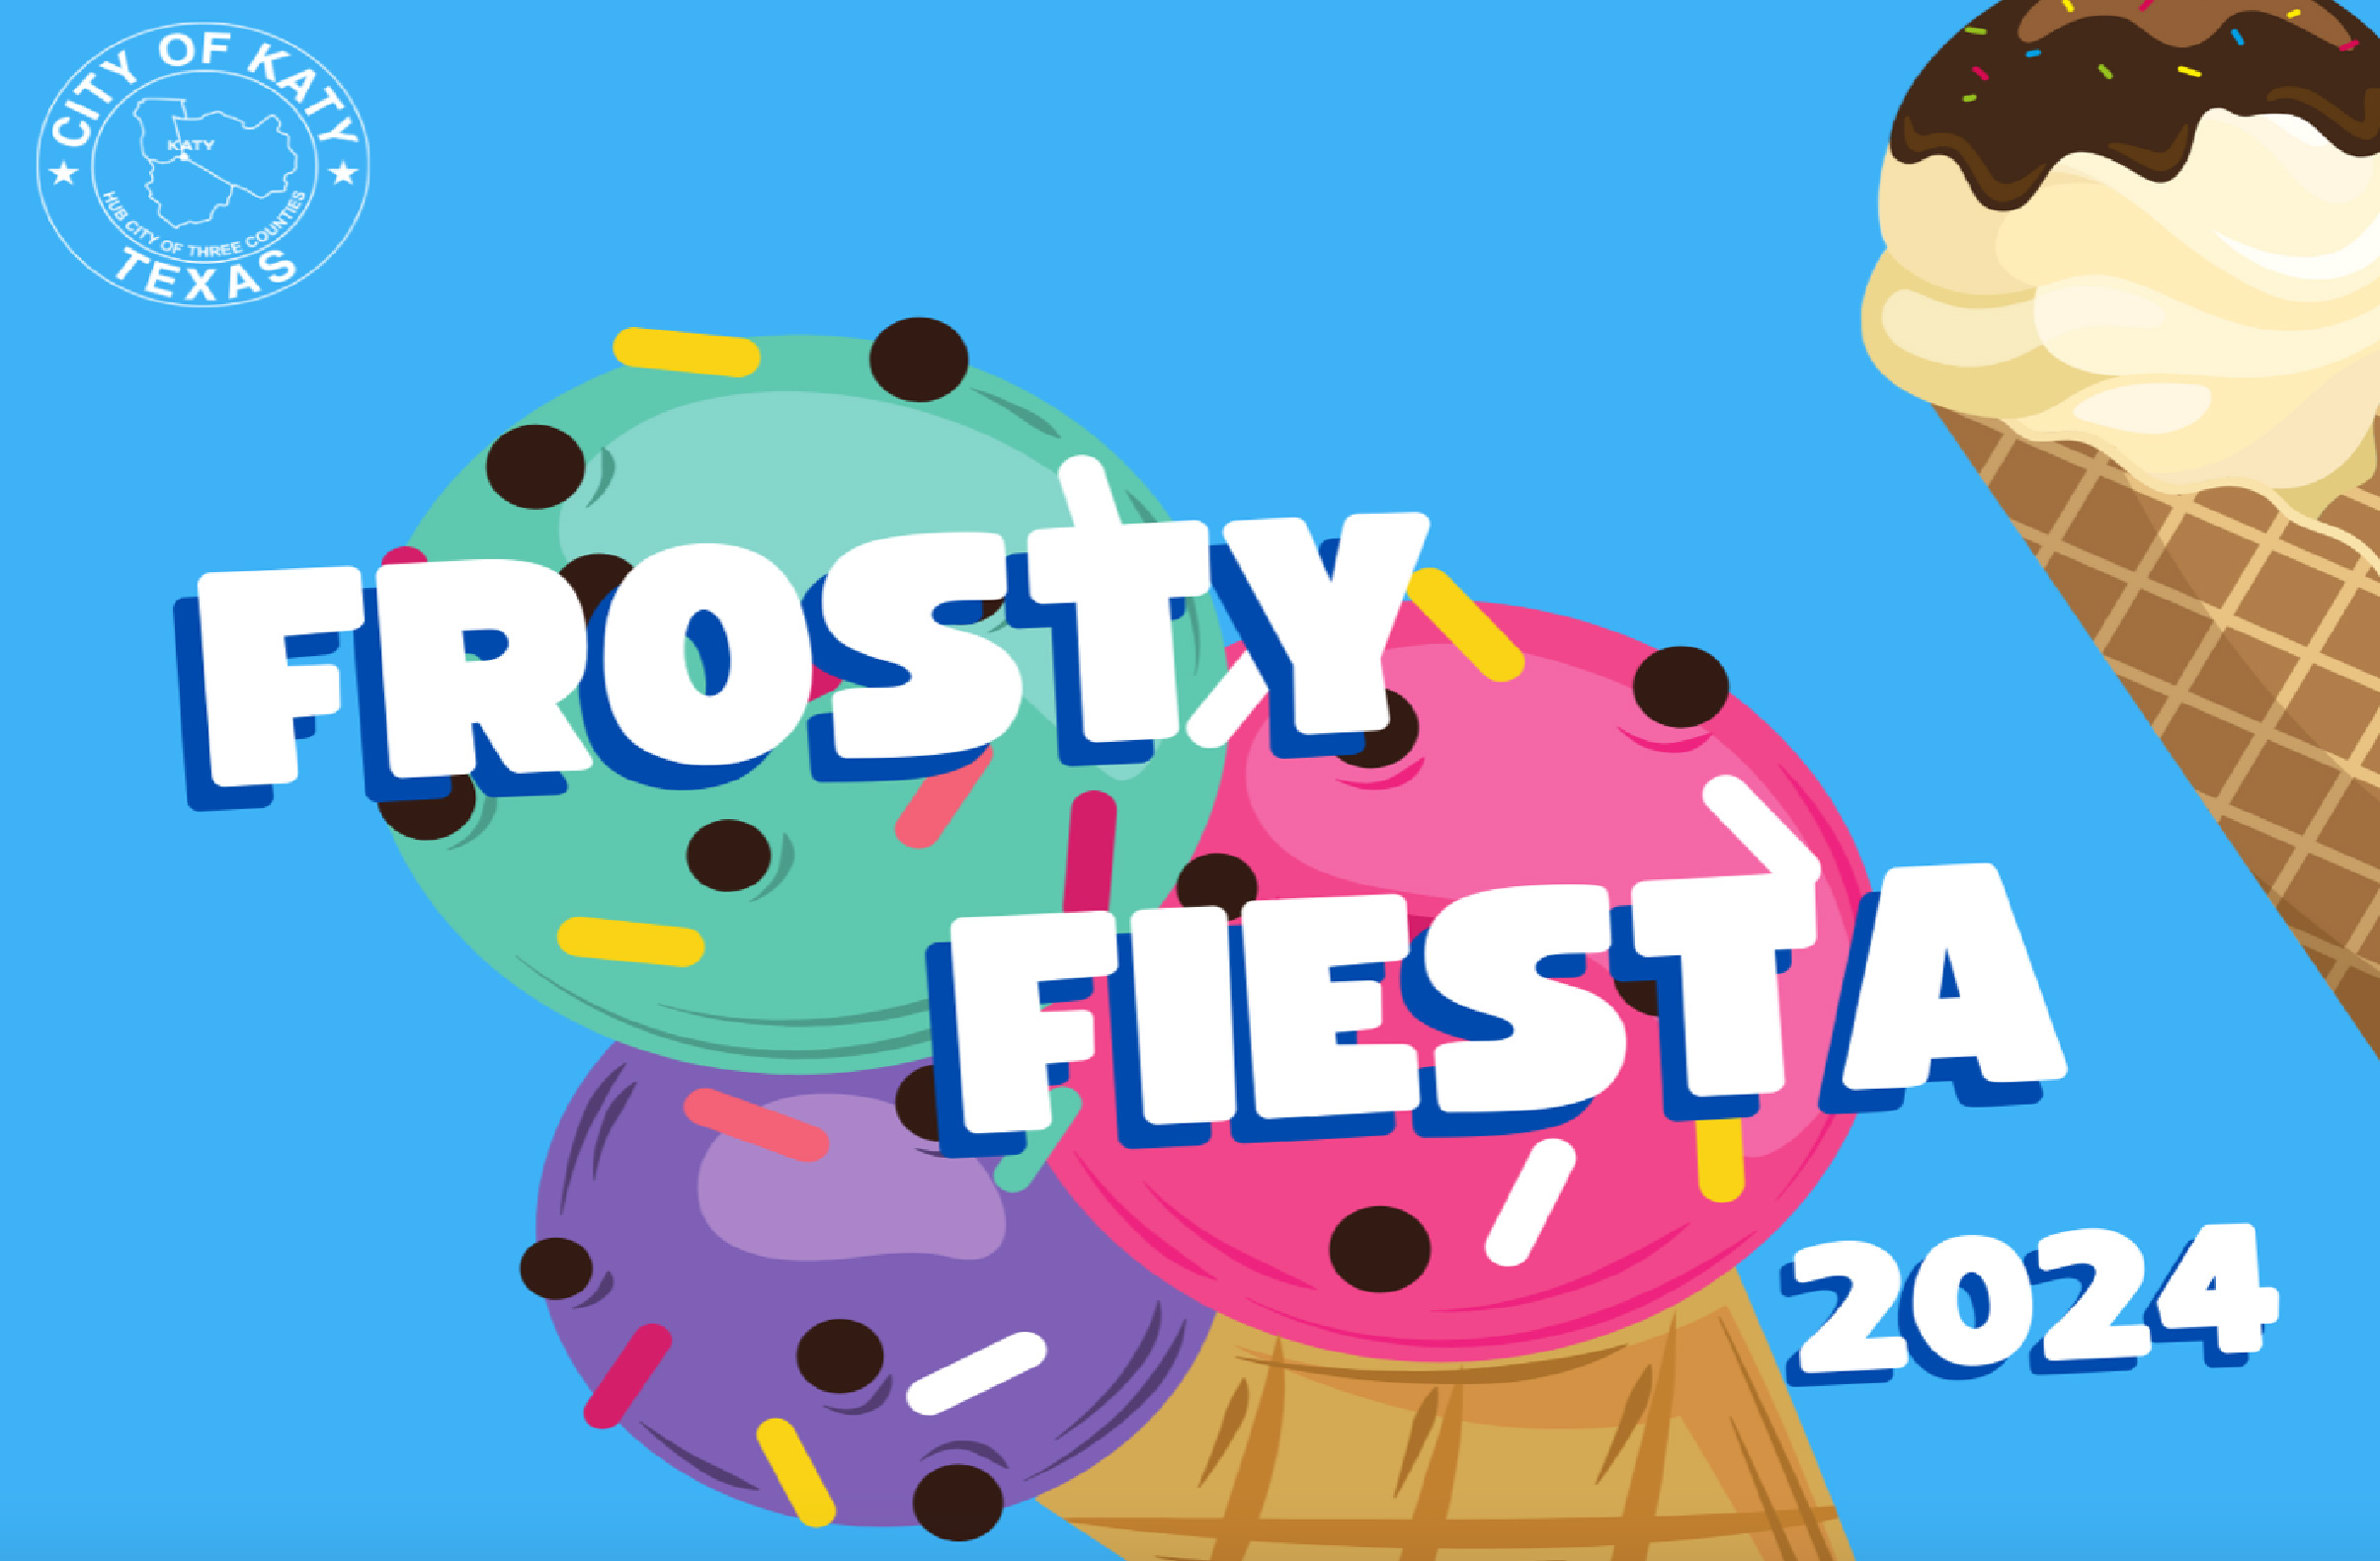 City of Katy to Host Frosty Fiesta on Saturday, June 22